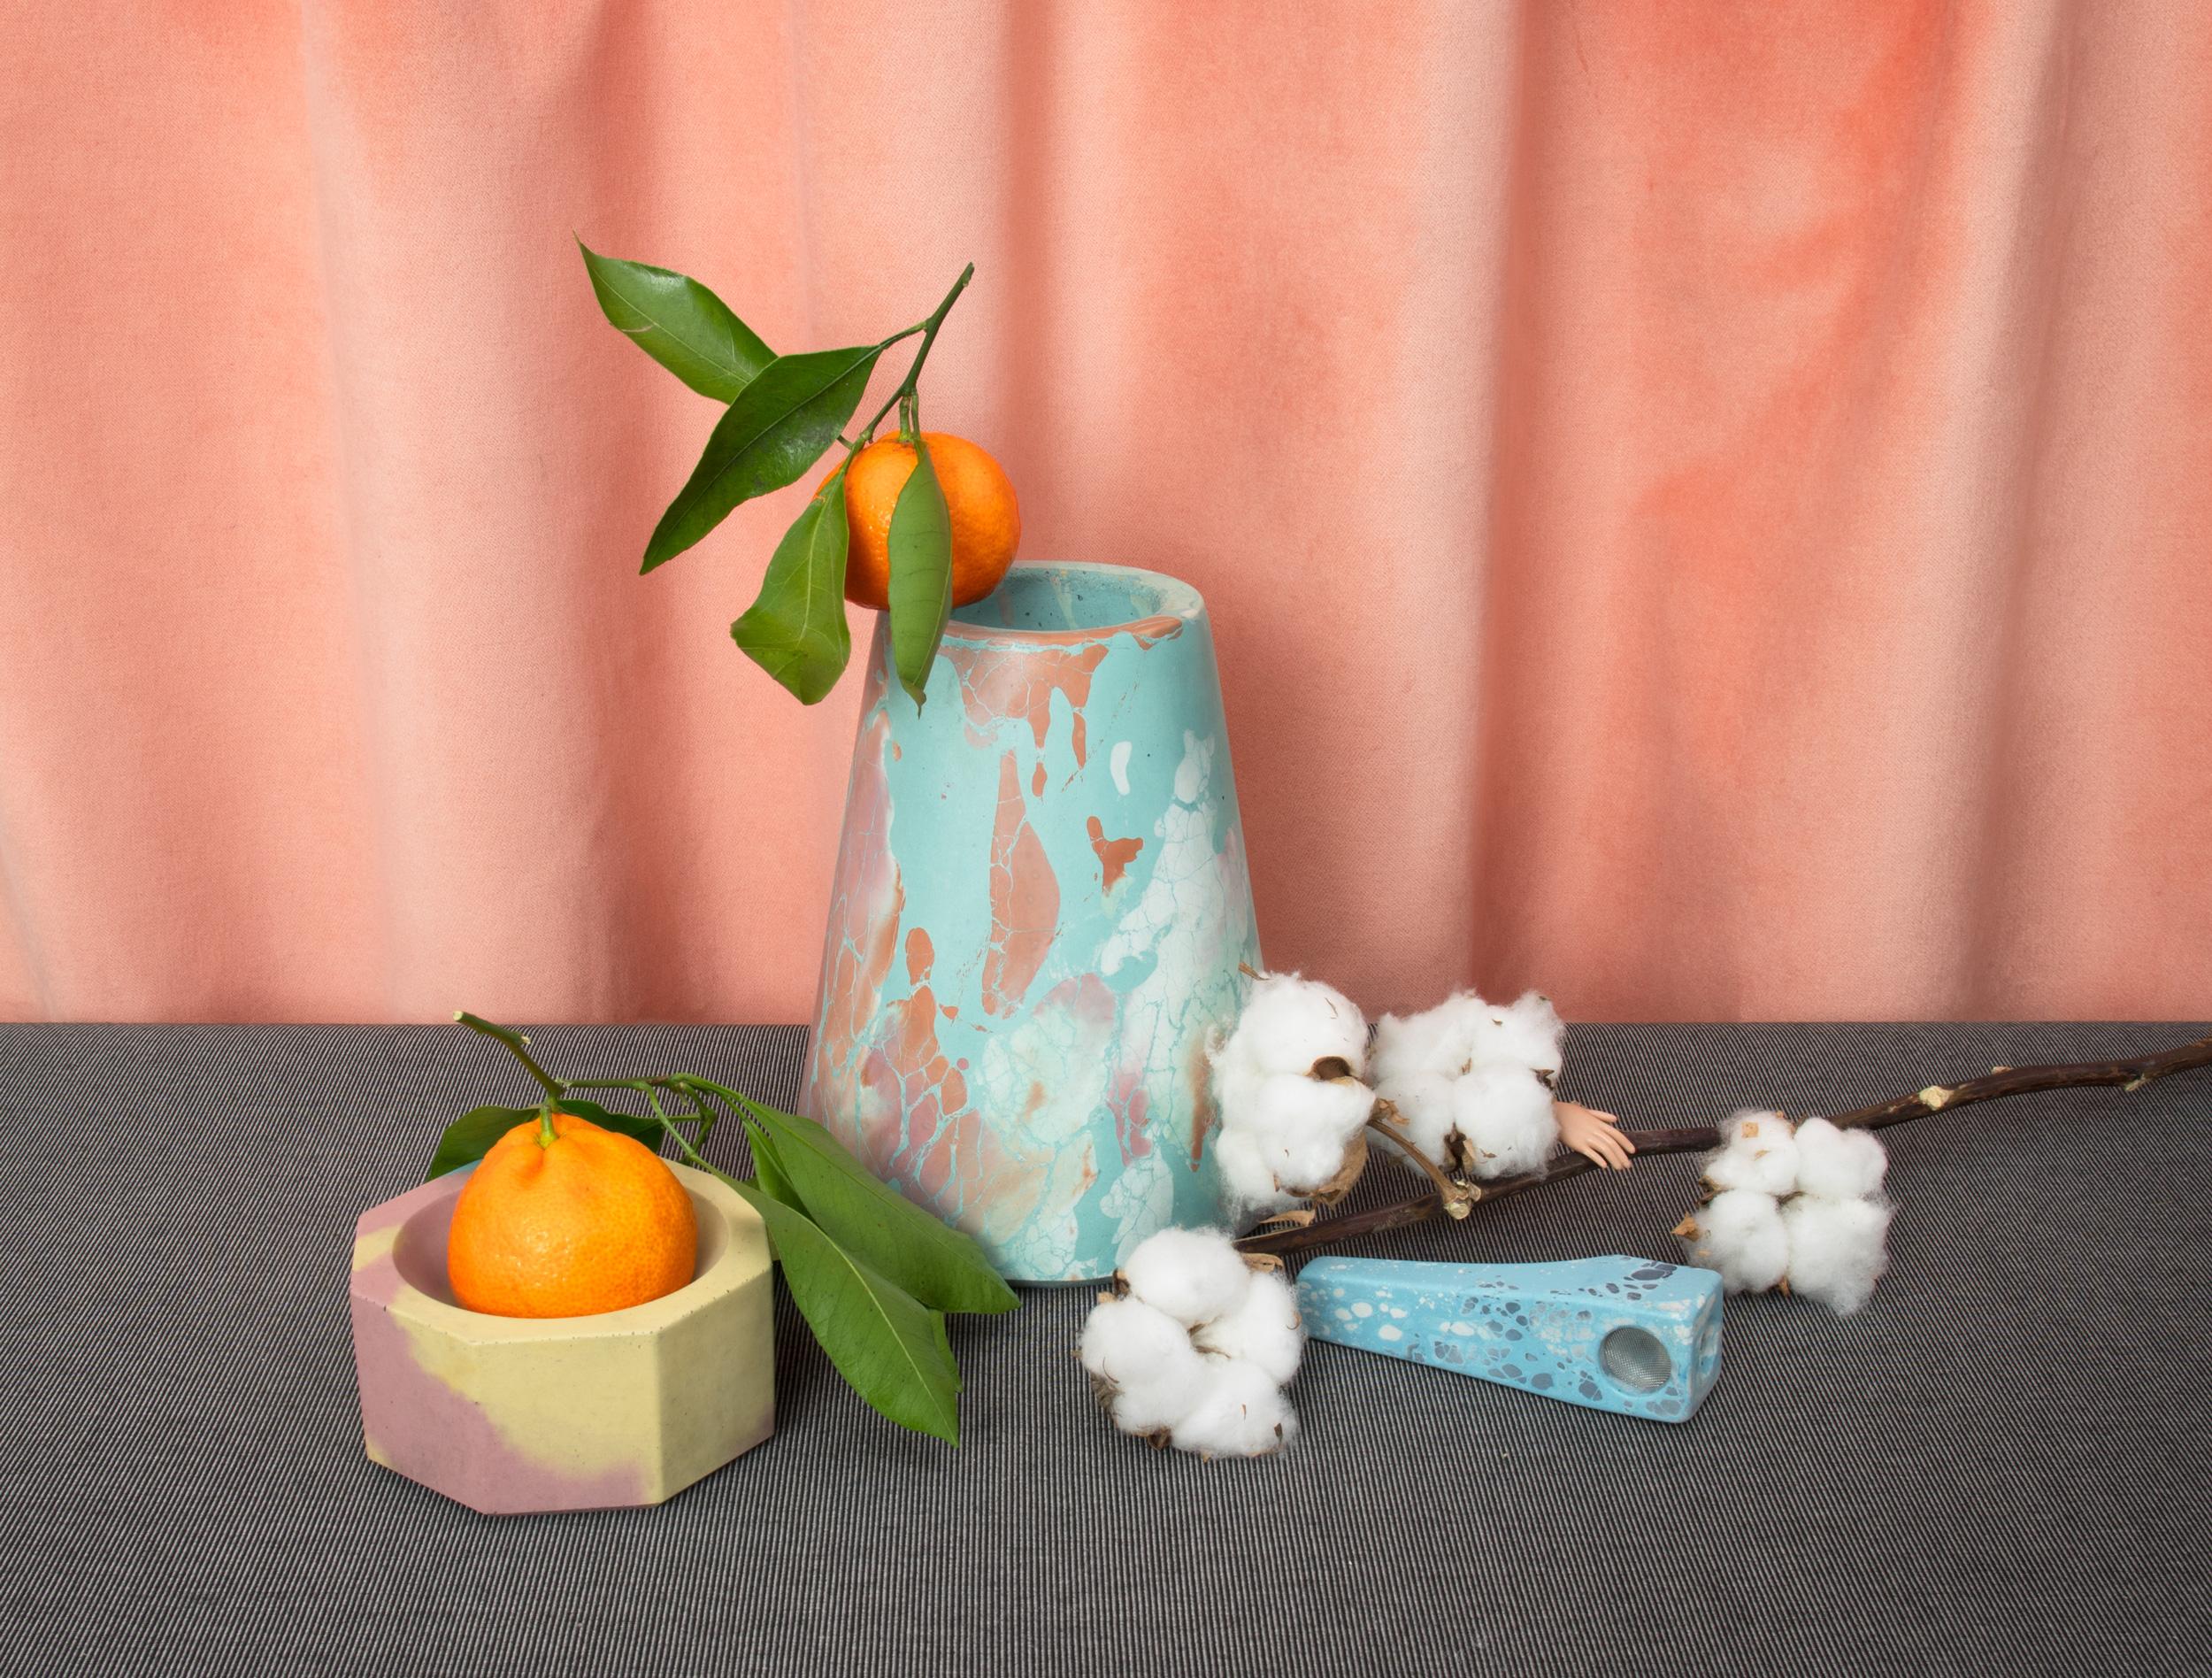 Canadian Vesta Concrete Vase in Detritus Pattern, Handmade Organic Modern Vessel in Stock For Sale